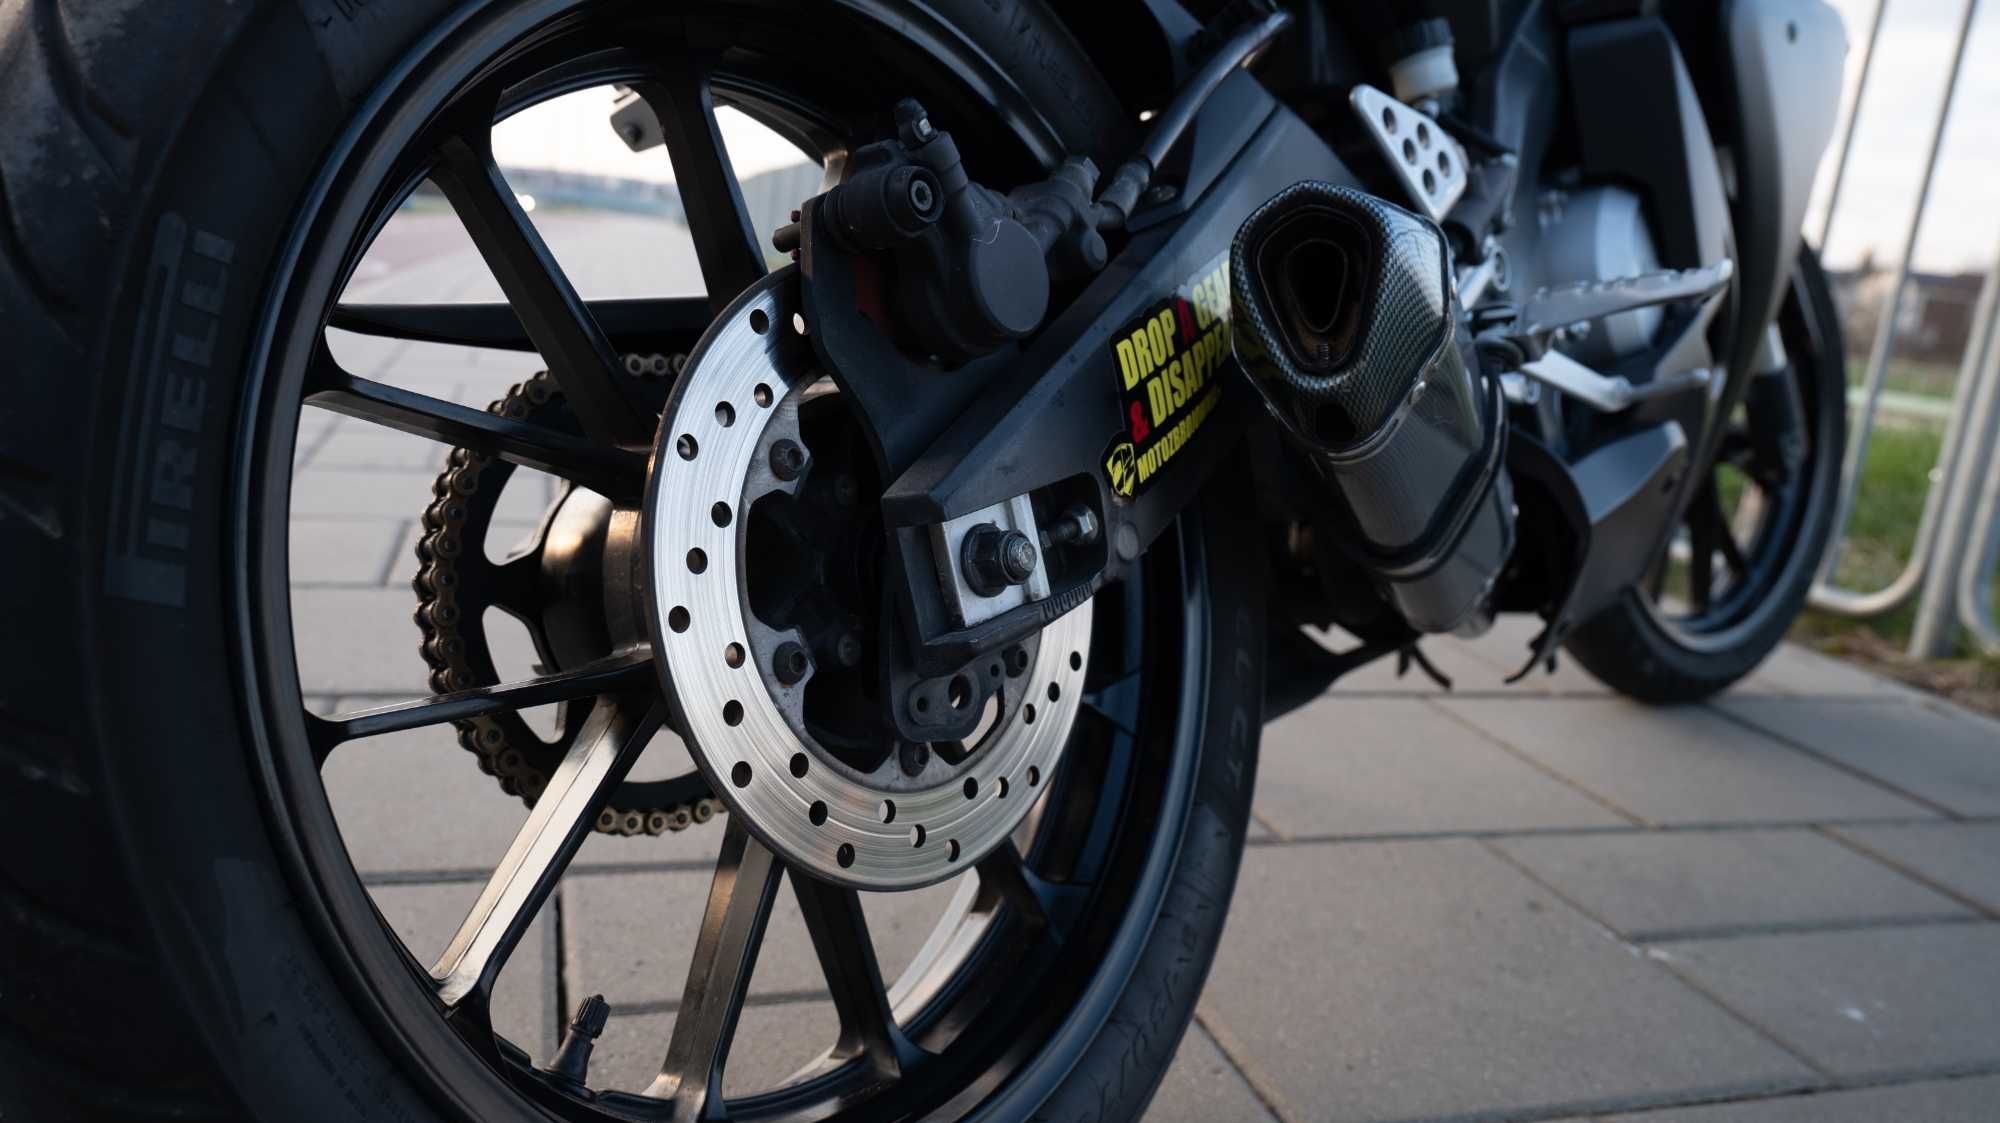 Motocykl Yamaha YZF R125, 2014 rok, stan - Bardzo dobry!